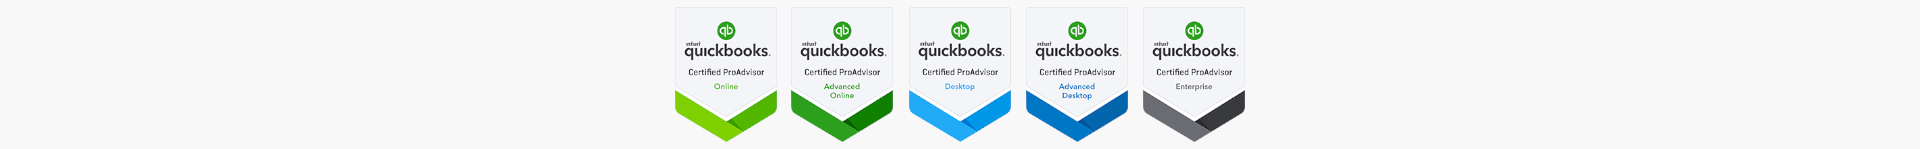 badge icons for quickbooks certified proadvisor for advanced qb desktop, advanced qb online, and enterprise certifications